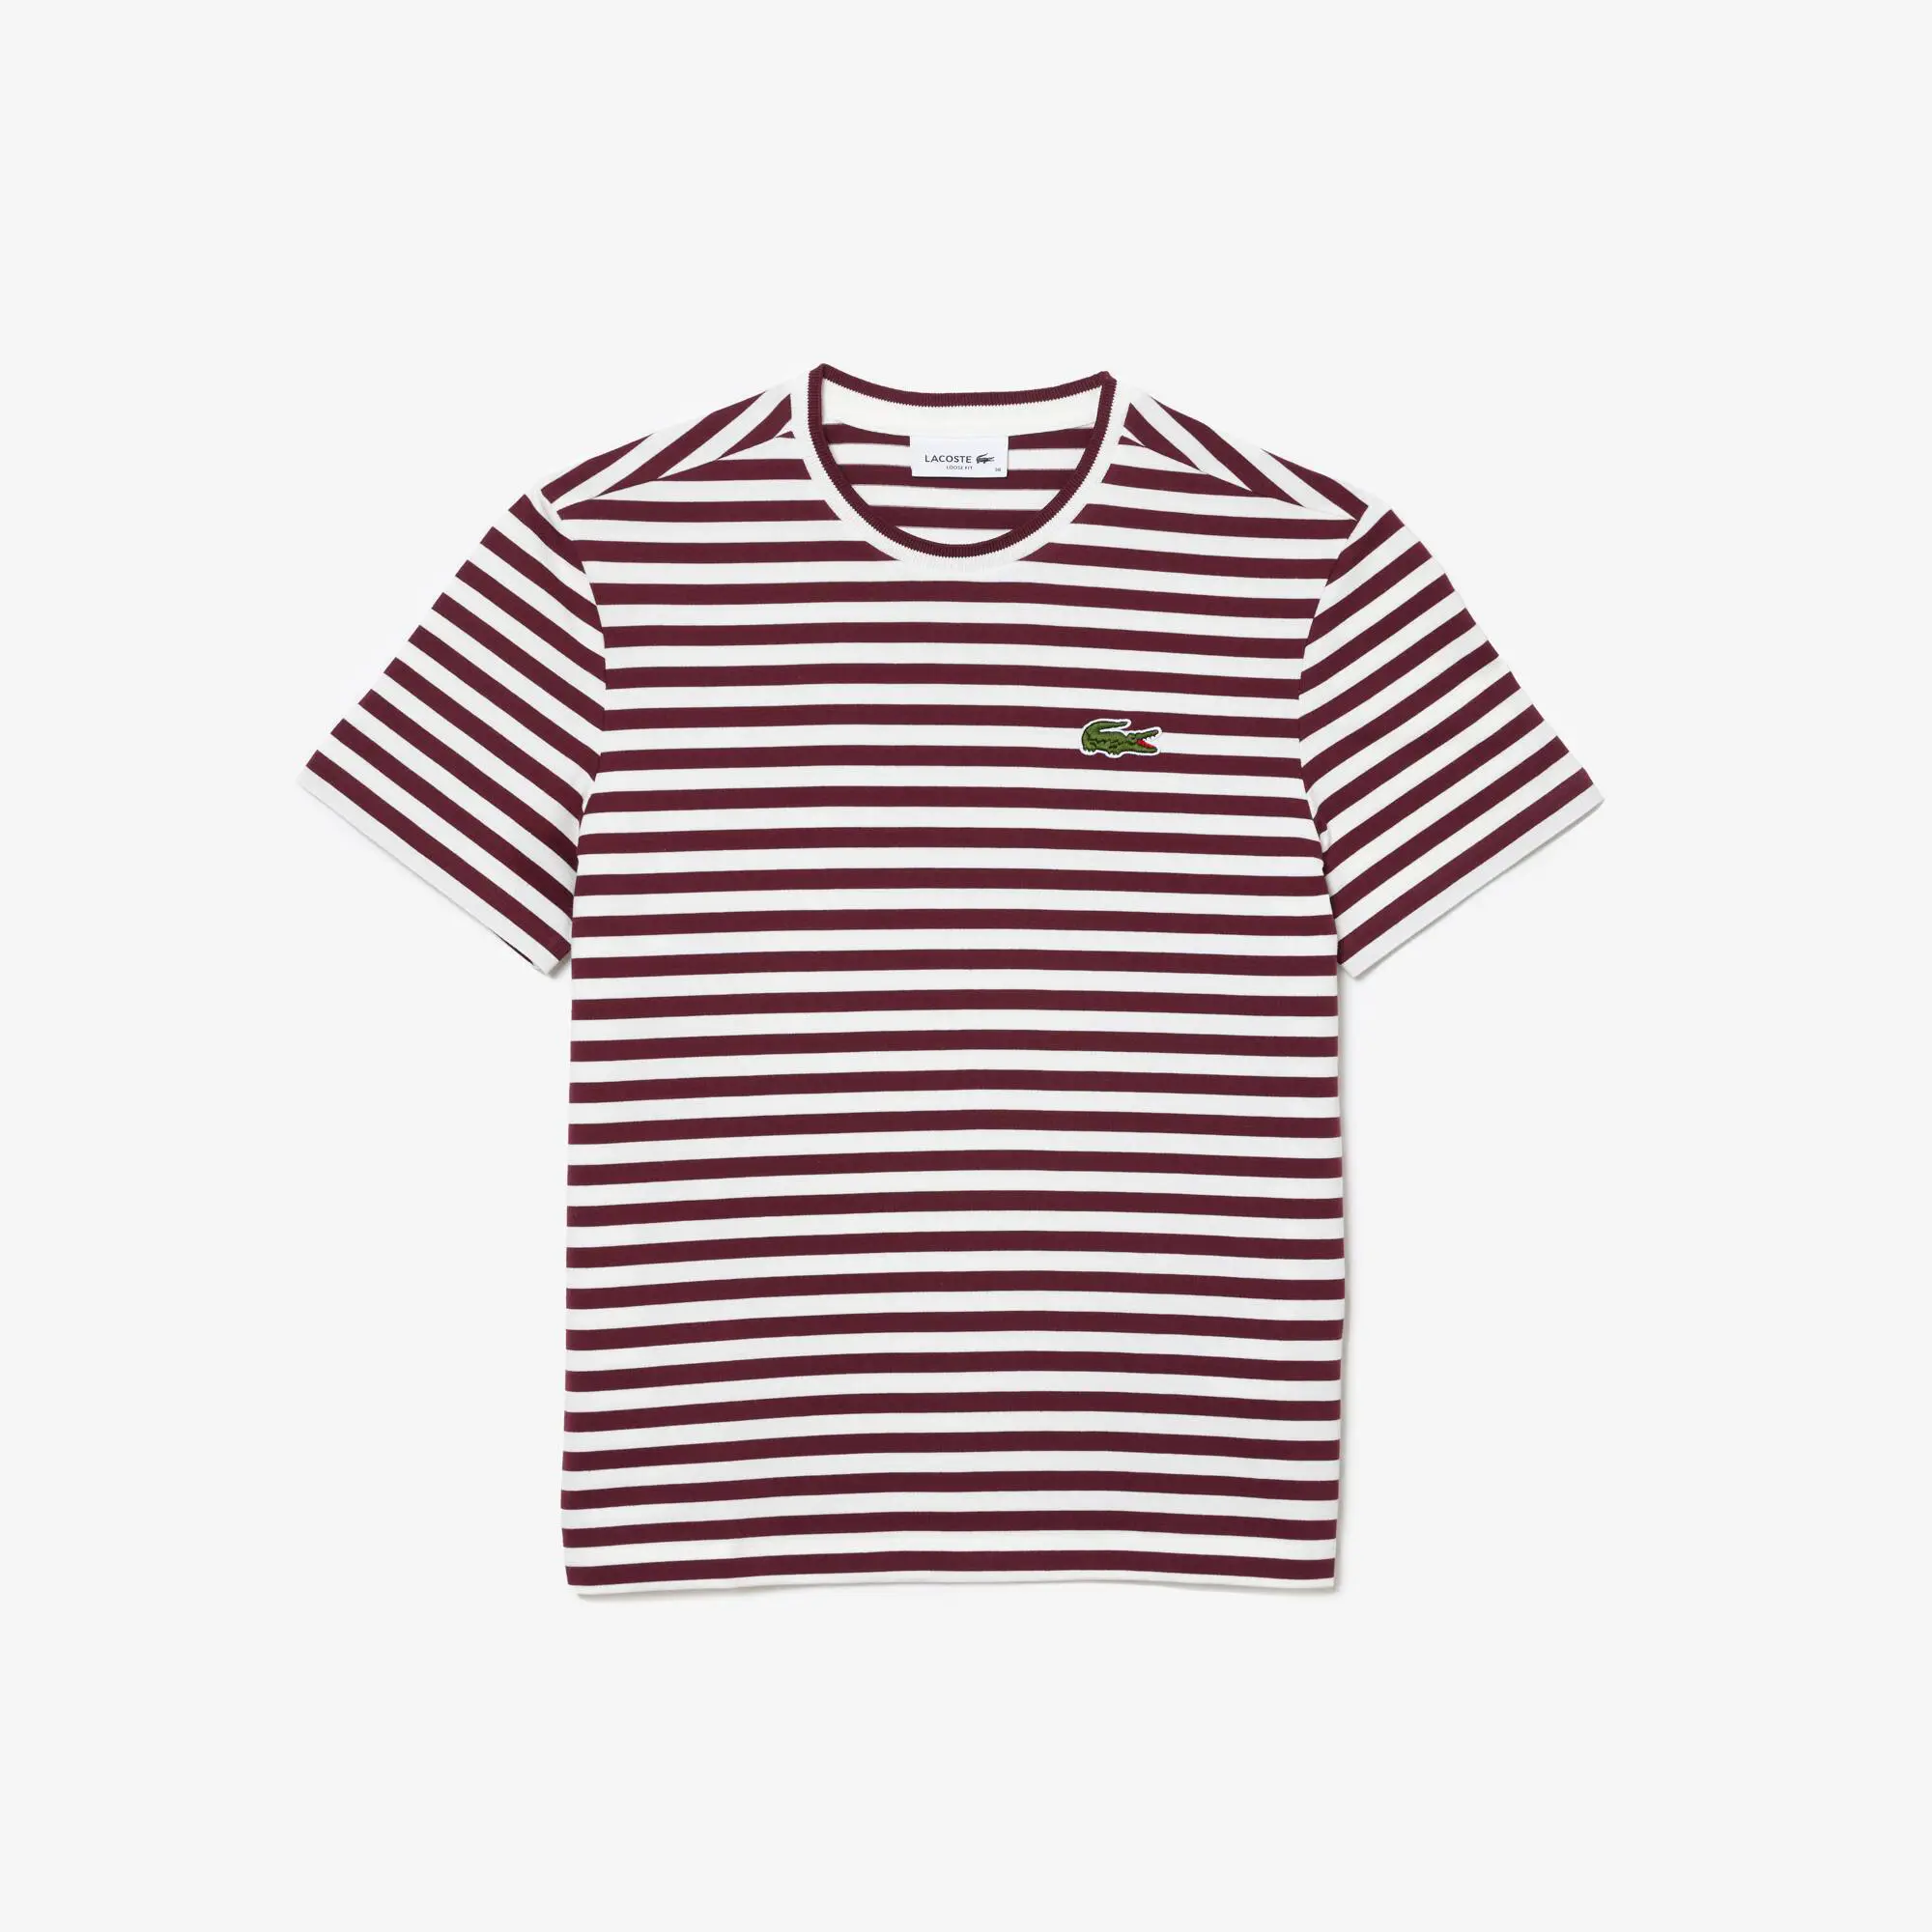 Lacoste Women's Lacoste Loose Fit Striped Cotton Jersey T-Shirt. 2